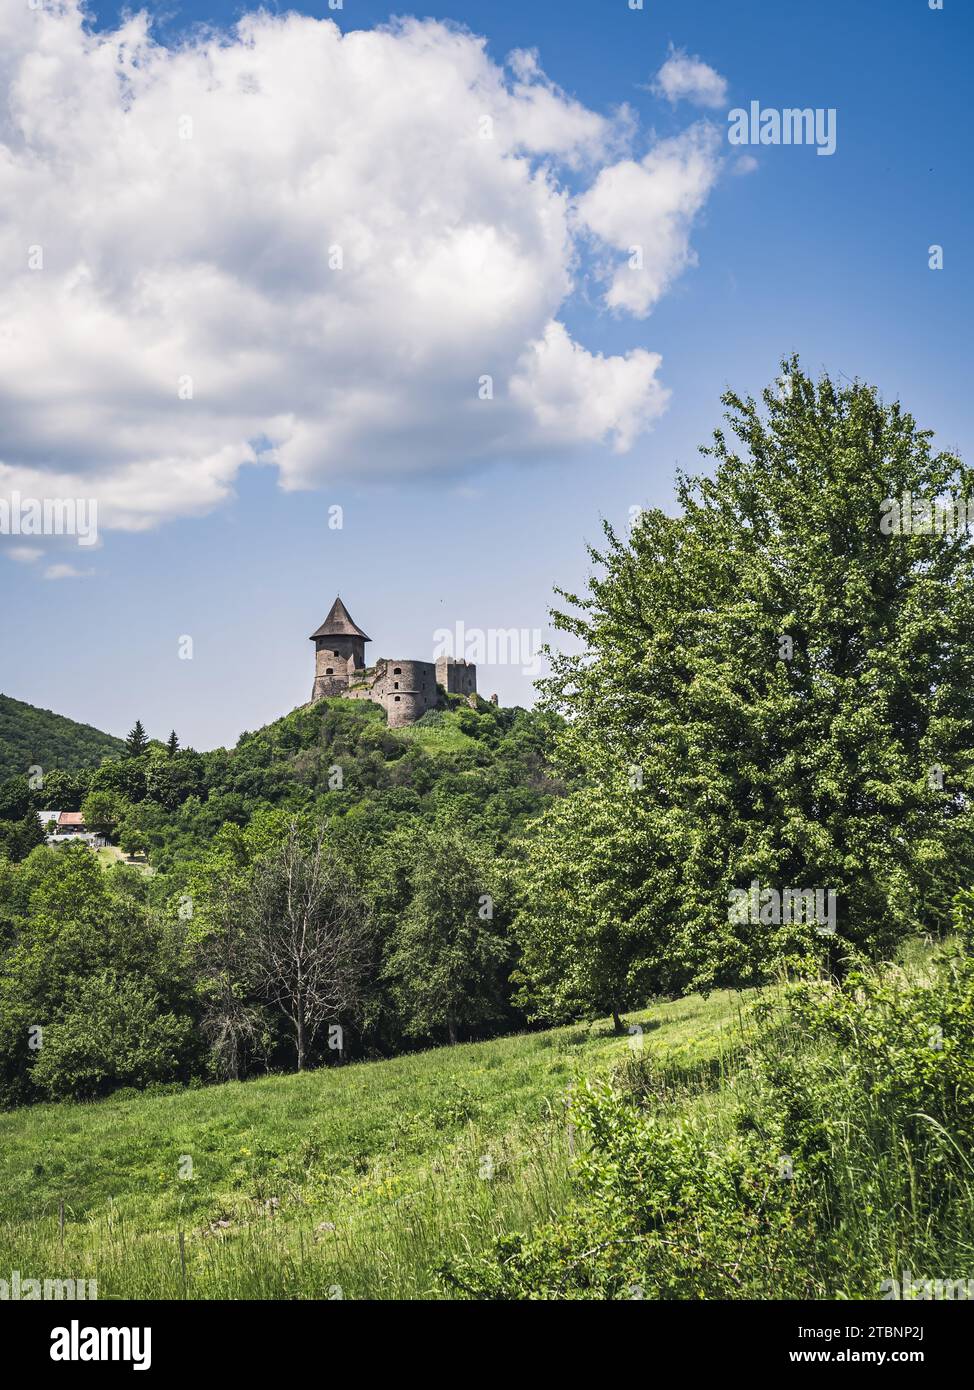 Tree bordered view of the famous Castle of Somosko. Slovakian name is Šomoška hrad, Hungarian name is Somoskői vár. Stock Photo